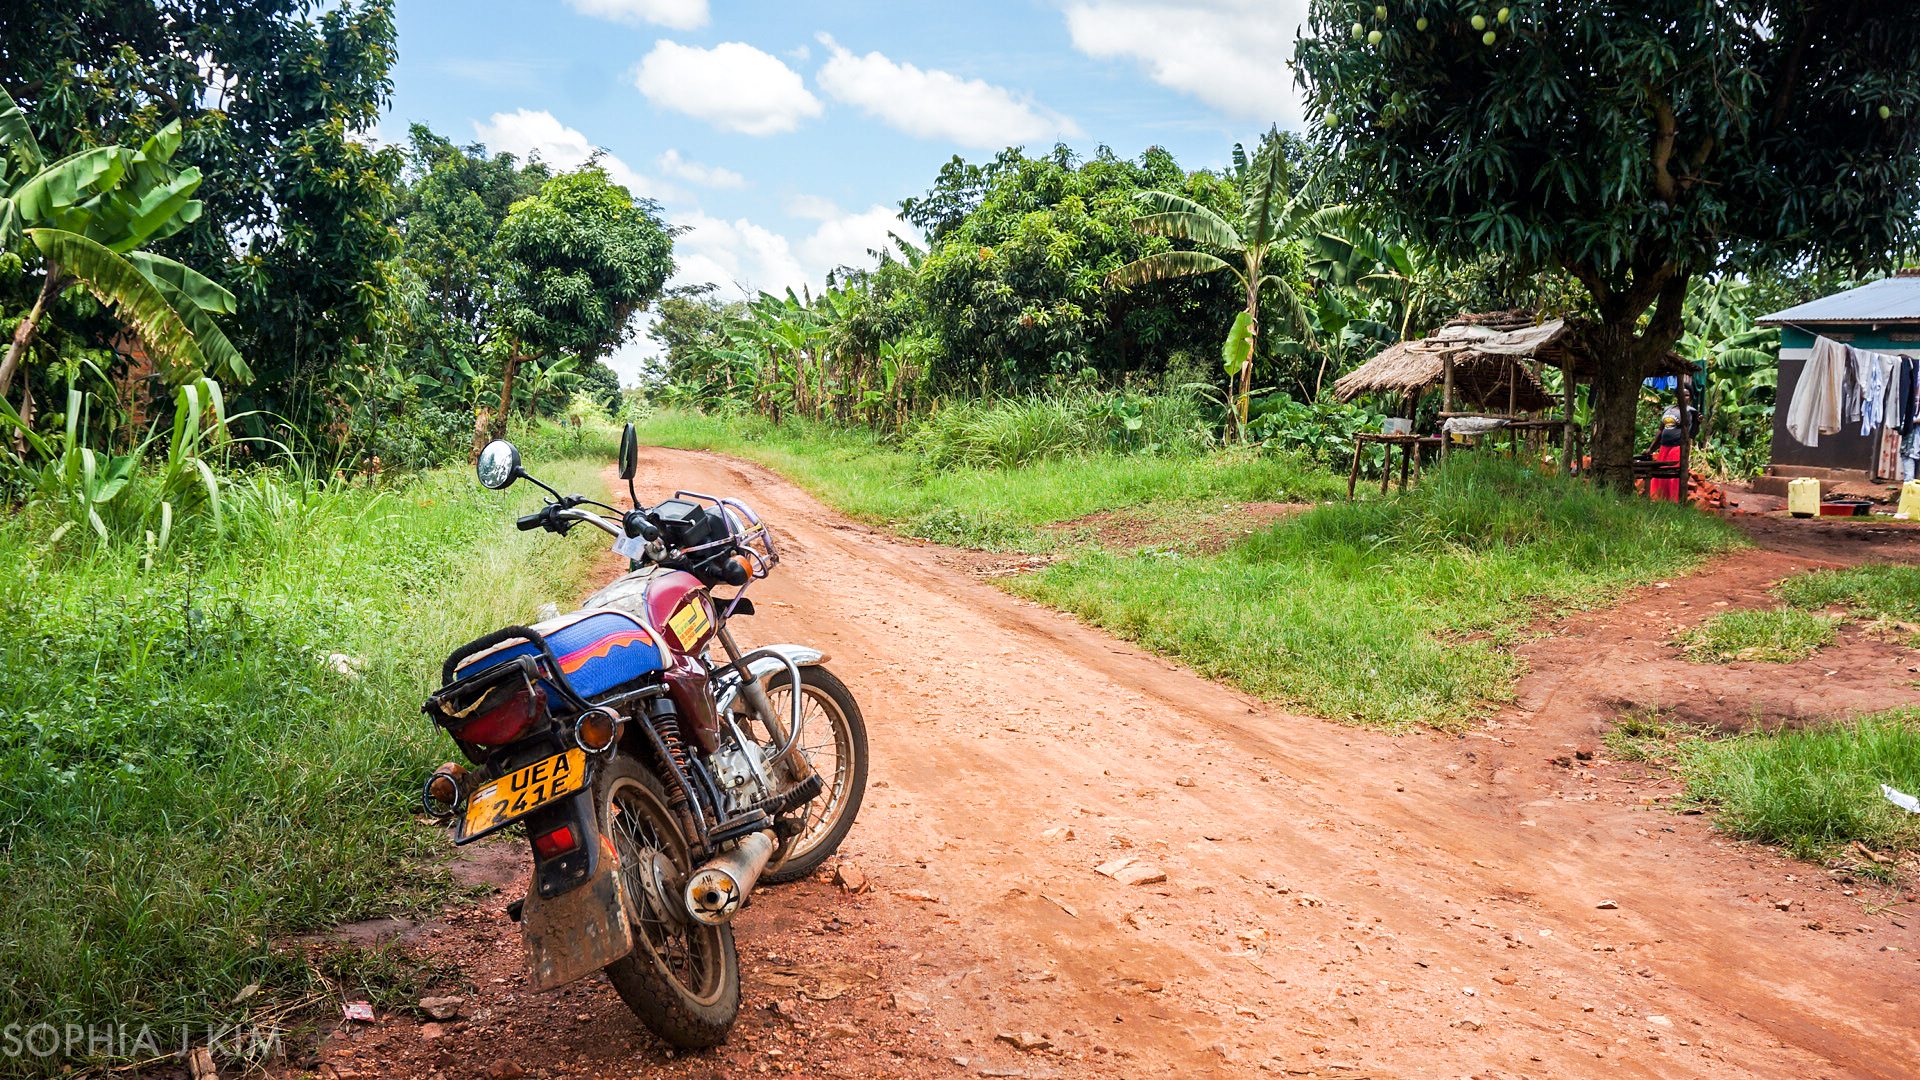 Bodaboda Local Transport Through the Countryside, Uganda